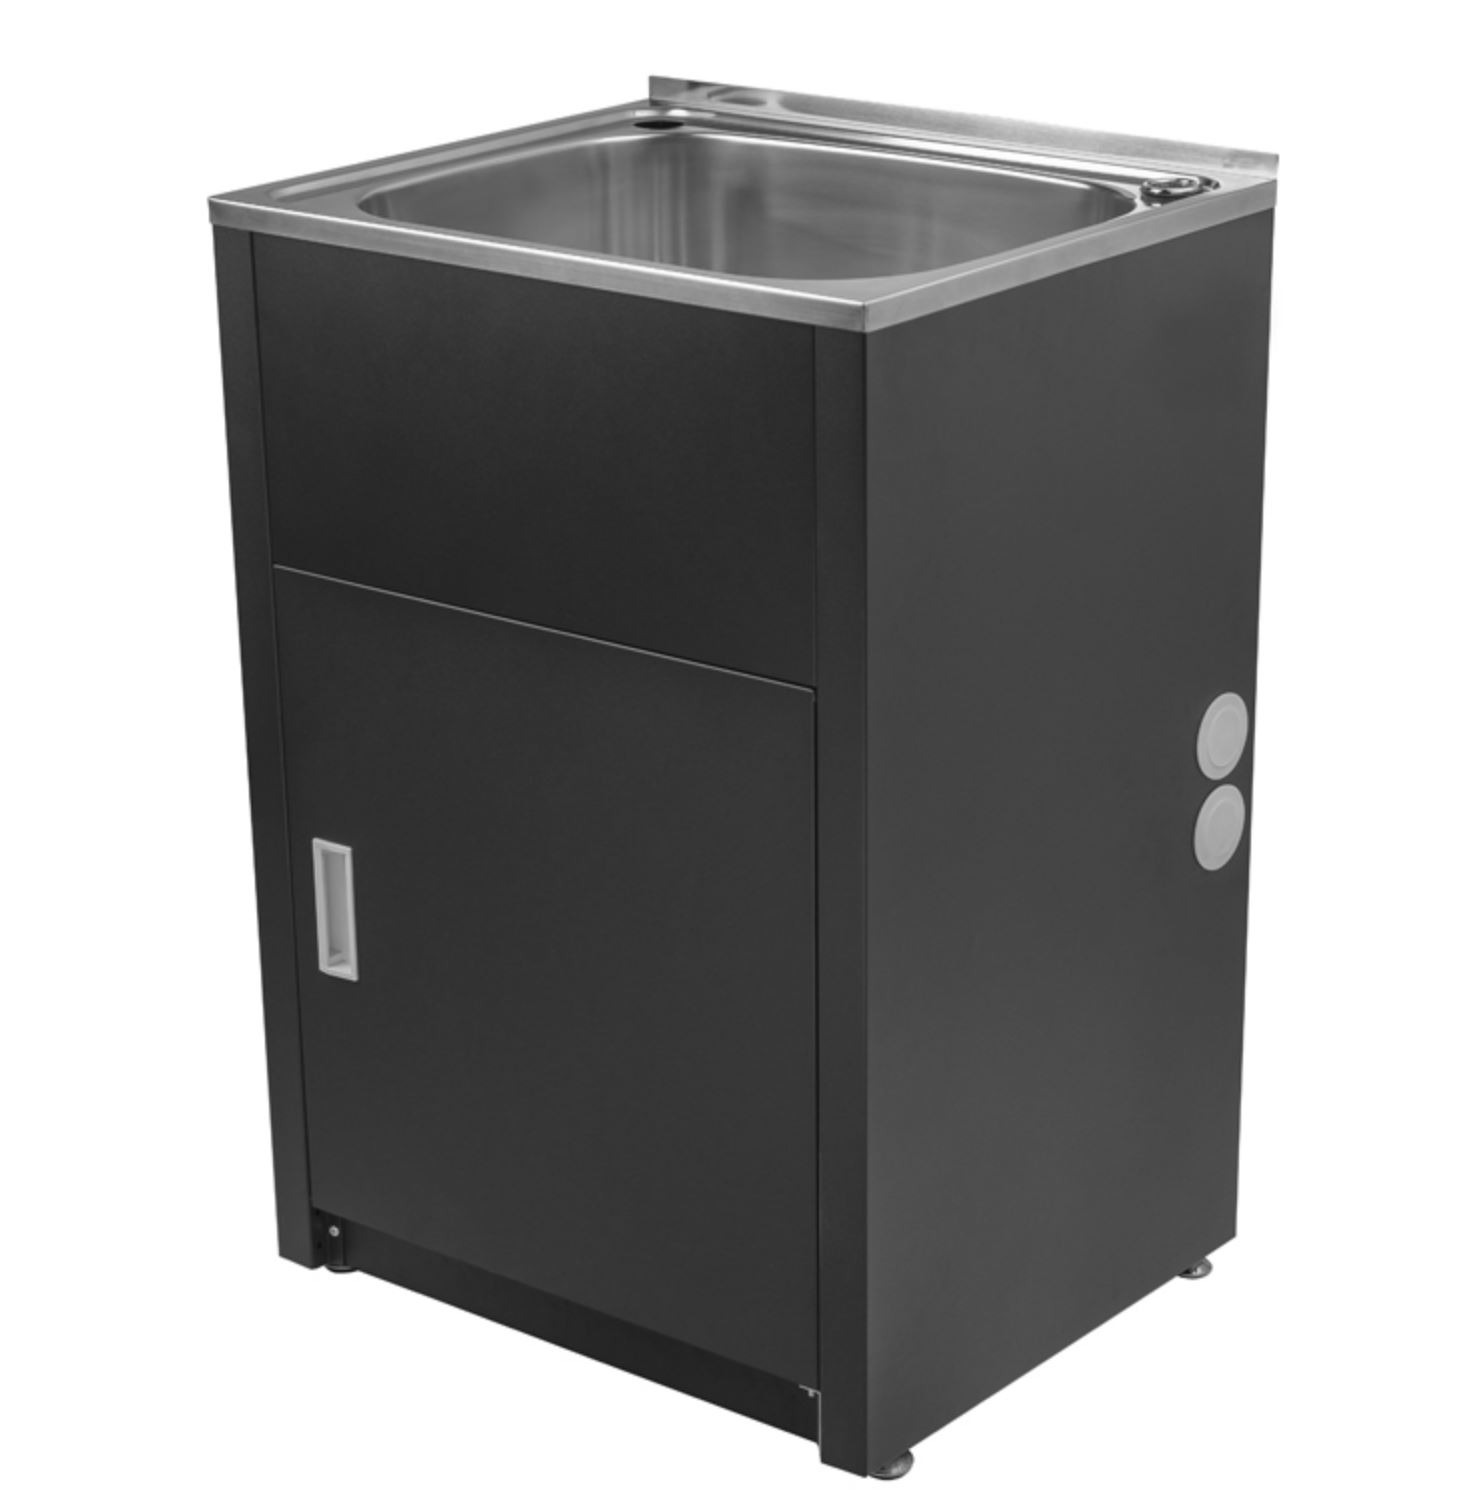 610Lx510Wx870Hmm 45L Stainless Steel Laundry Tub Cabinet Freestanding Matt Black